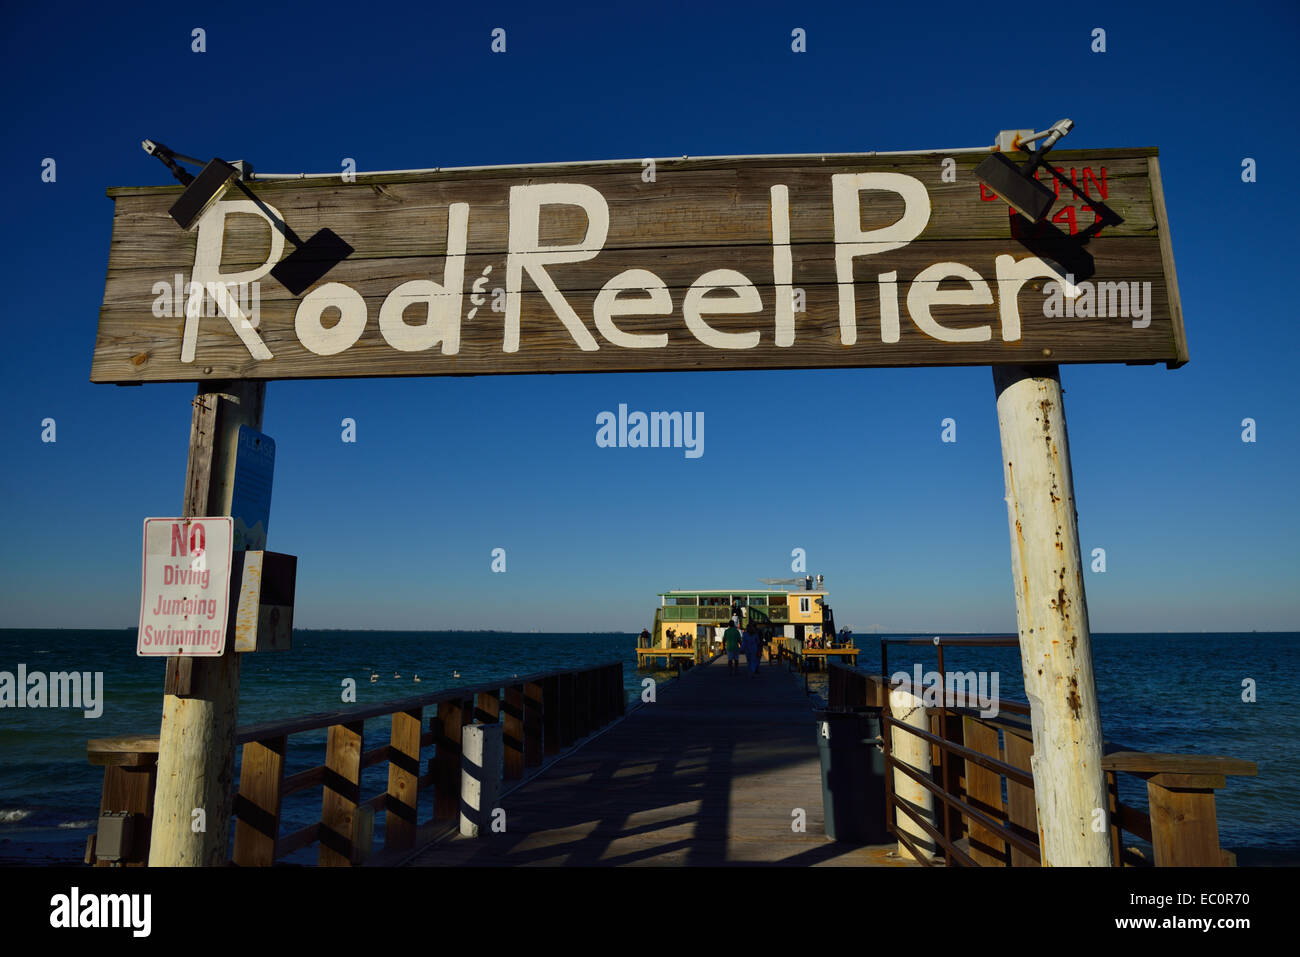 The quaint Rod & Reel Pier restaurant at sunset, Anna Maria Island FL Stock Photo